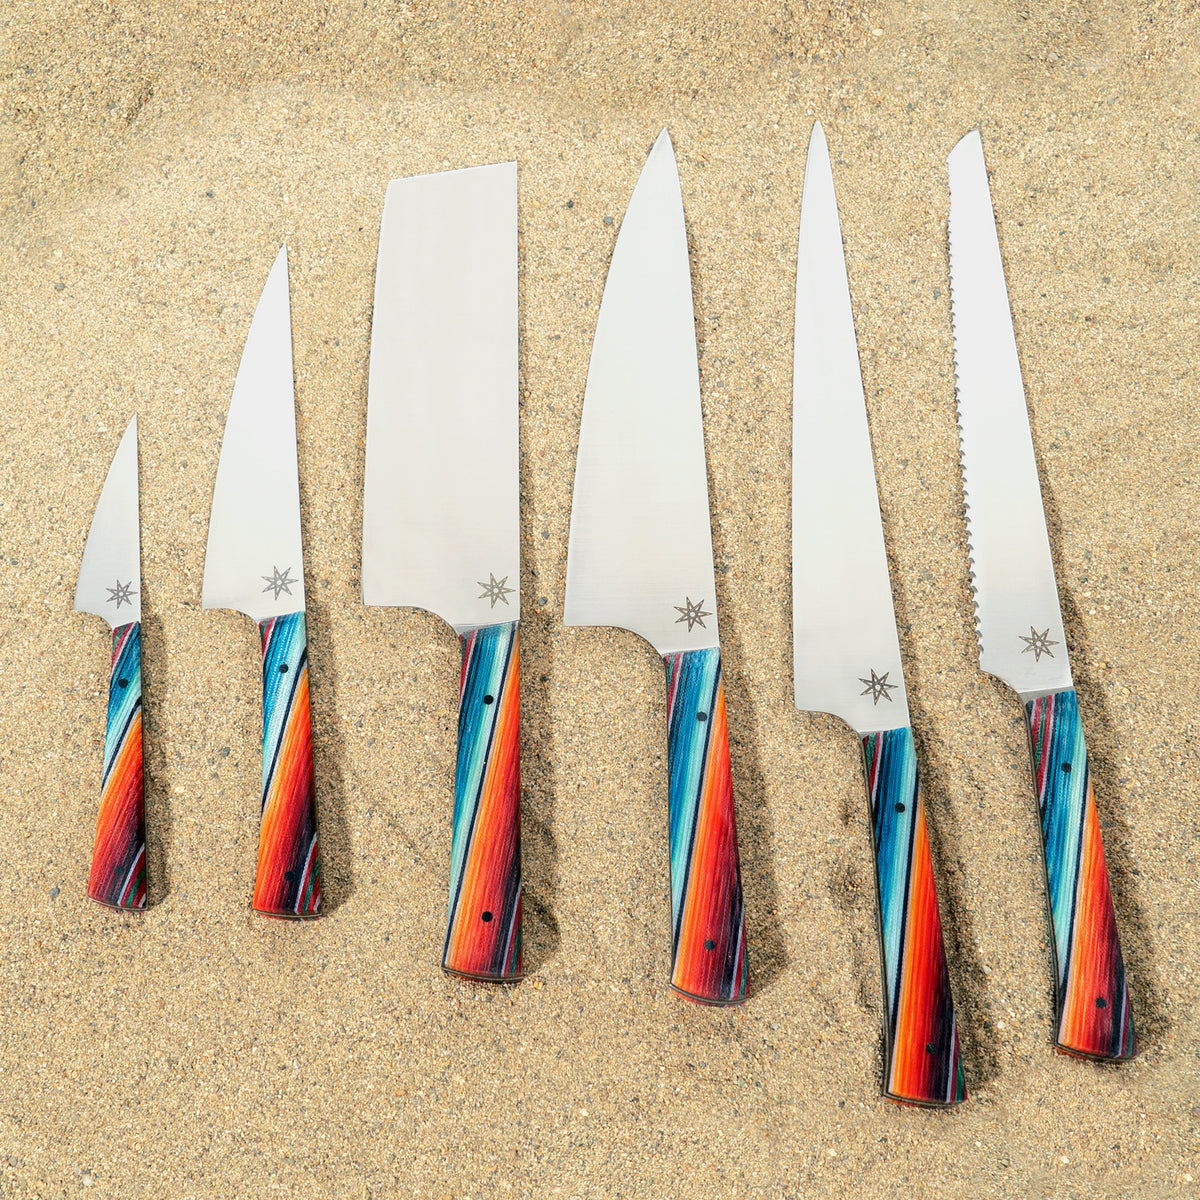 Town Cutler: 8.5 Chef Knife - Baja - Mexican Blanket G-Carta - Black G-10  Pins - Nitro-V